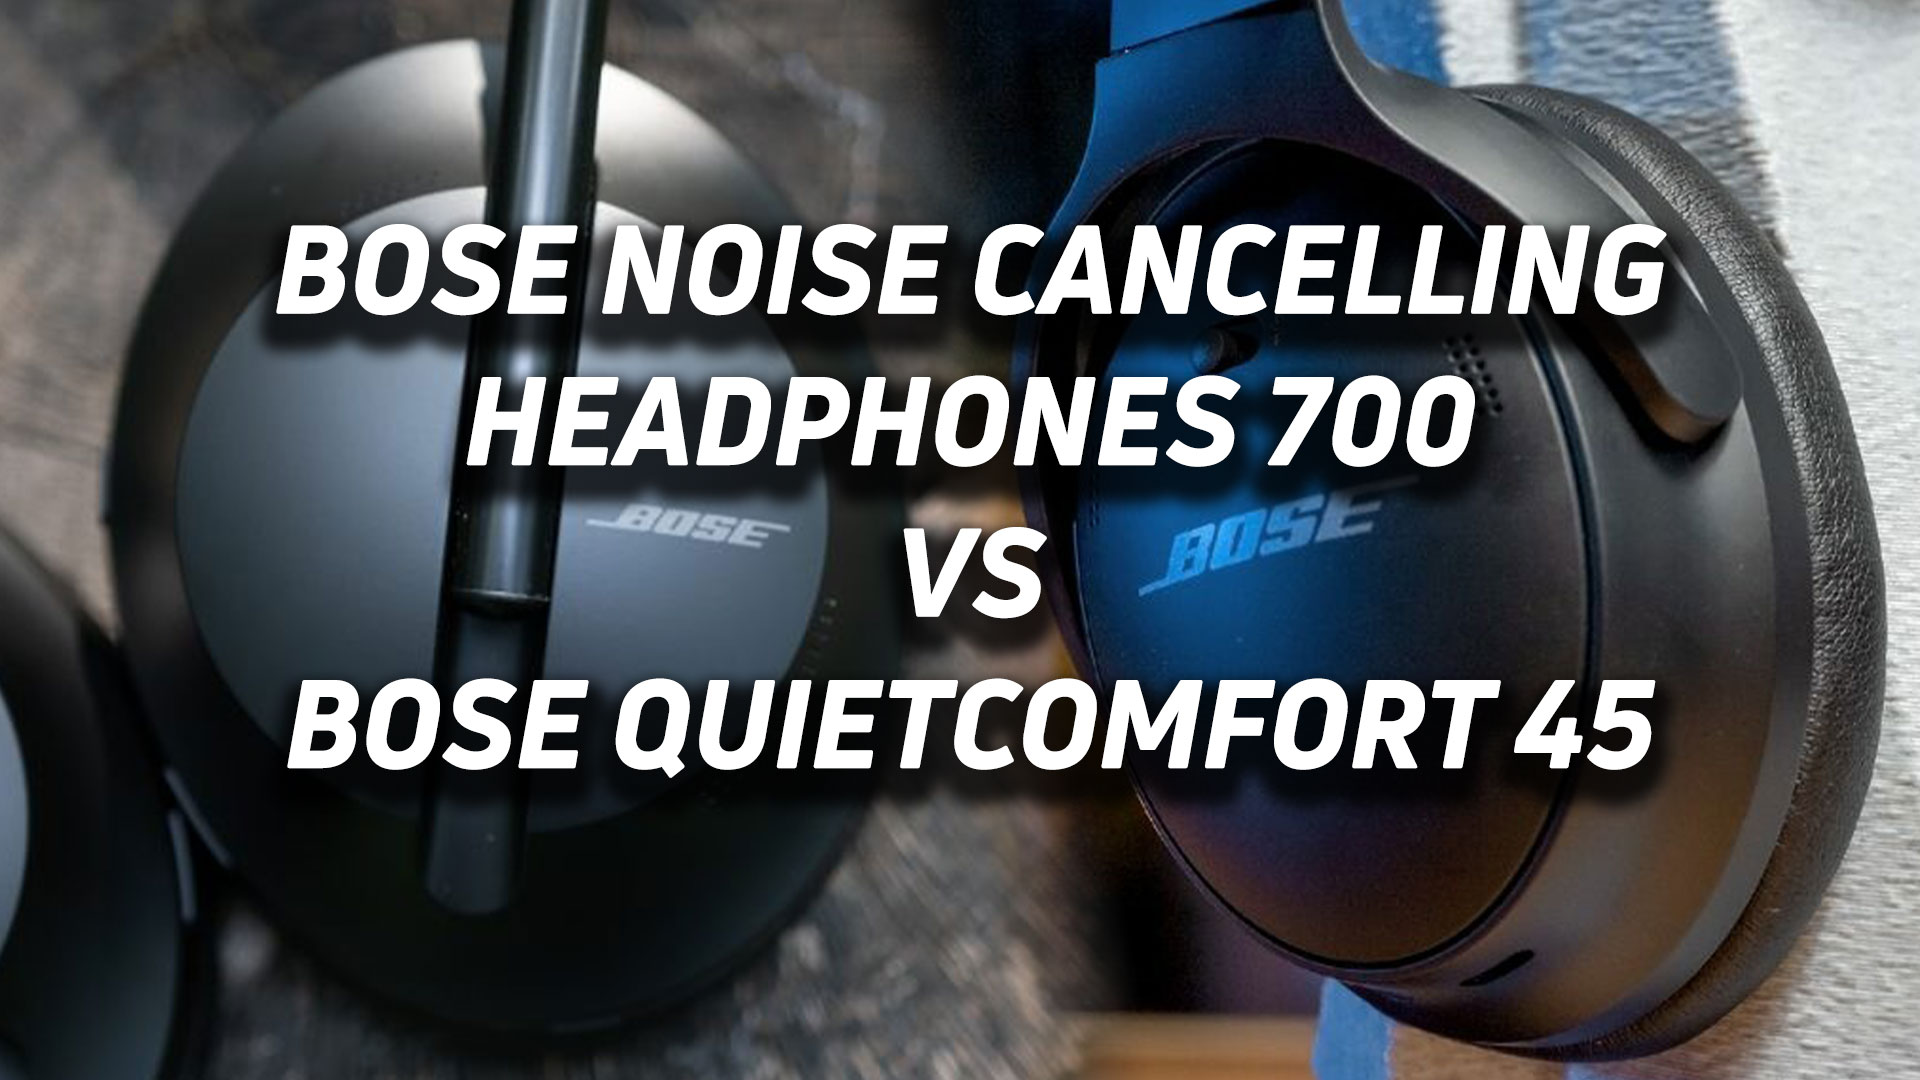 Bose Noise Canceling Headphones 700 vs Bose Quietcomfort 45